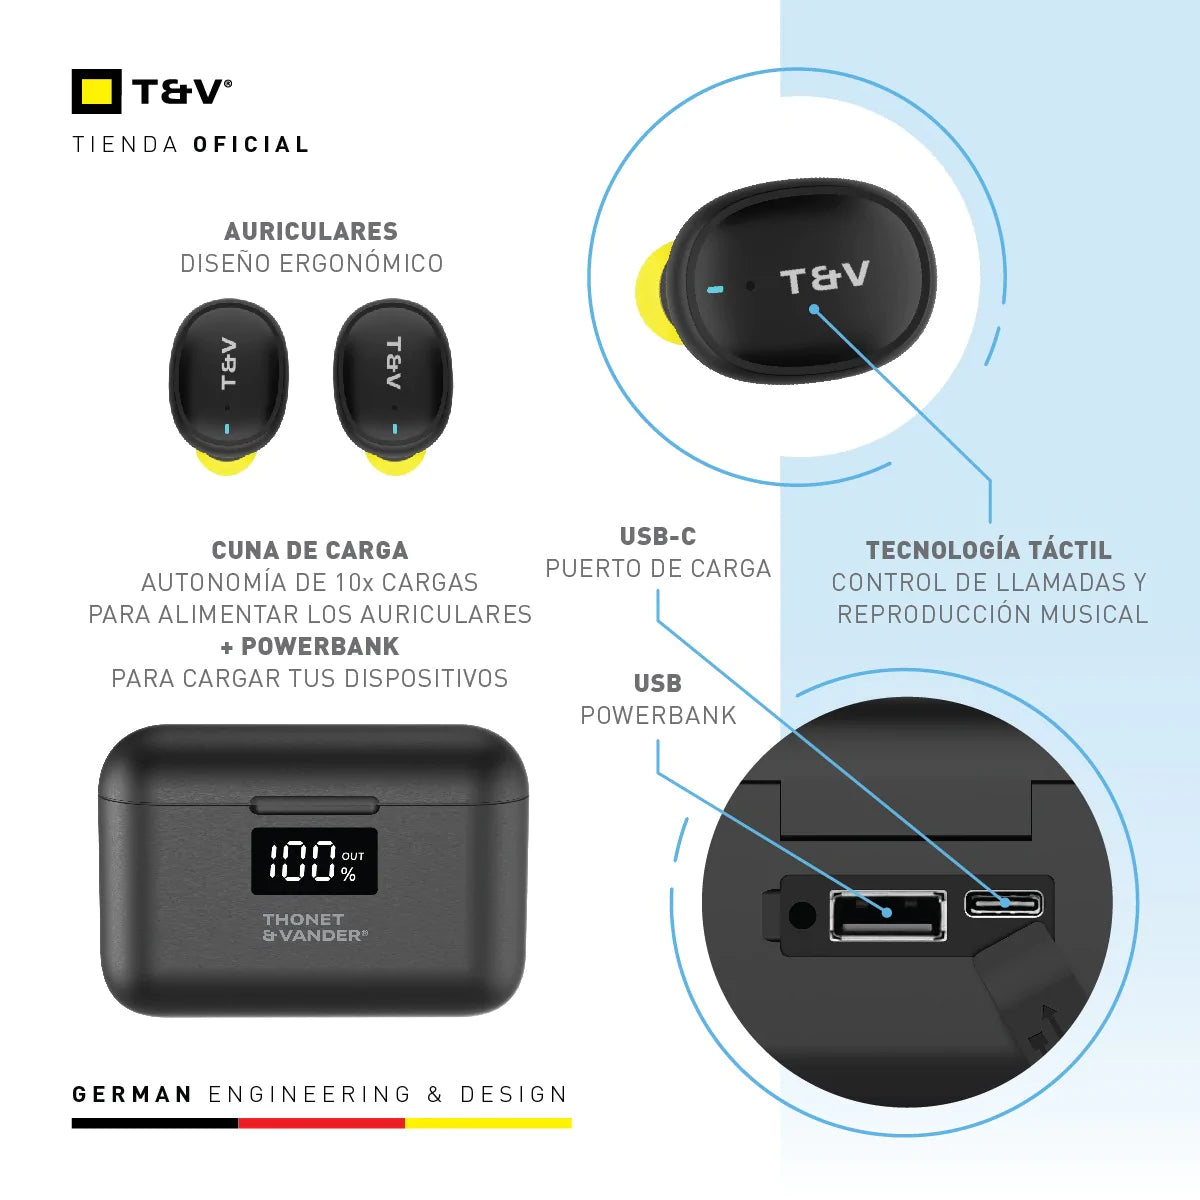 Audifonos Thonet & Vander 10Mw Earbuds Bluetooth Funciones Tactiles Bohne Topp Negros